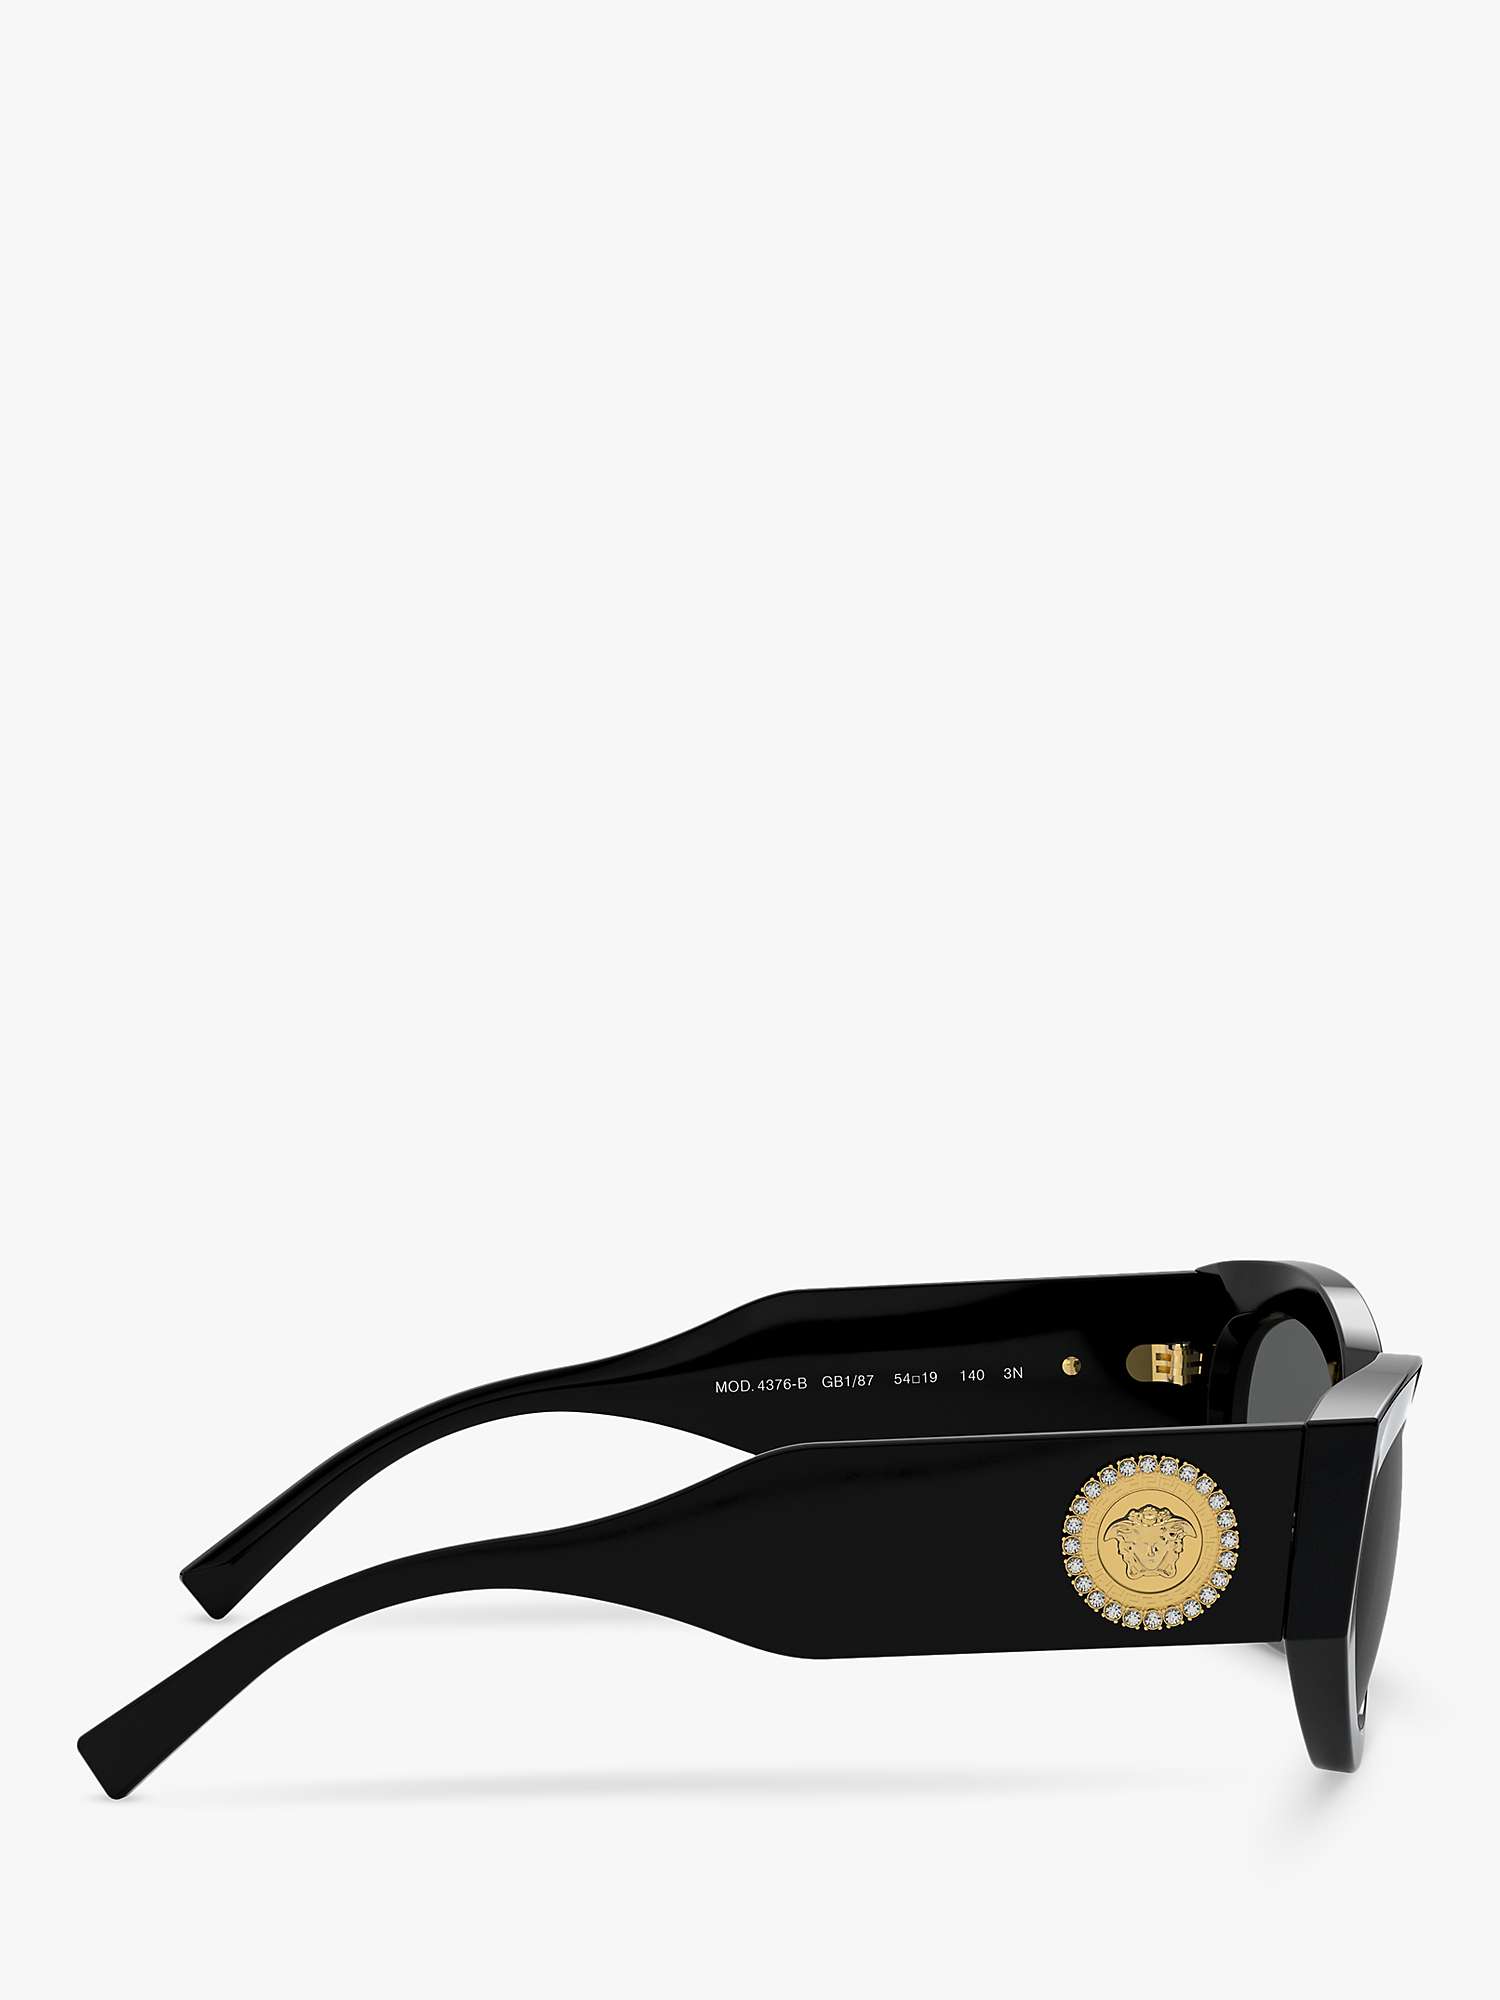 Buy Versace VE4376B Women's Irregular Sunglasses, Black Online at johnlewis.com